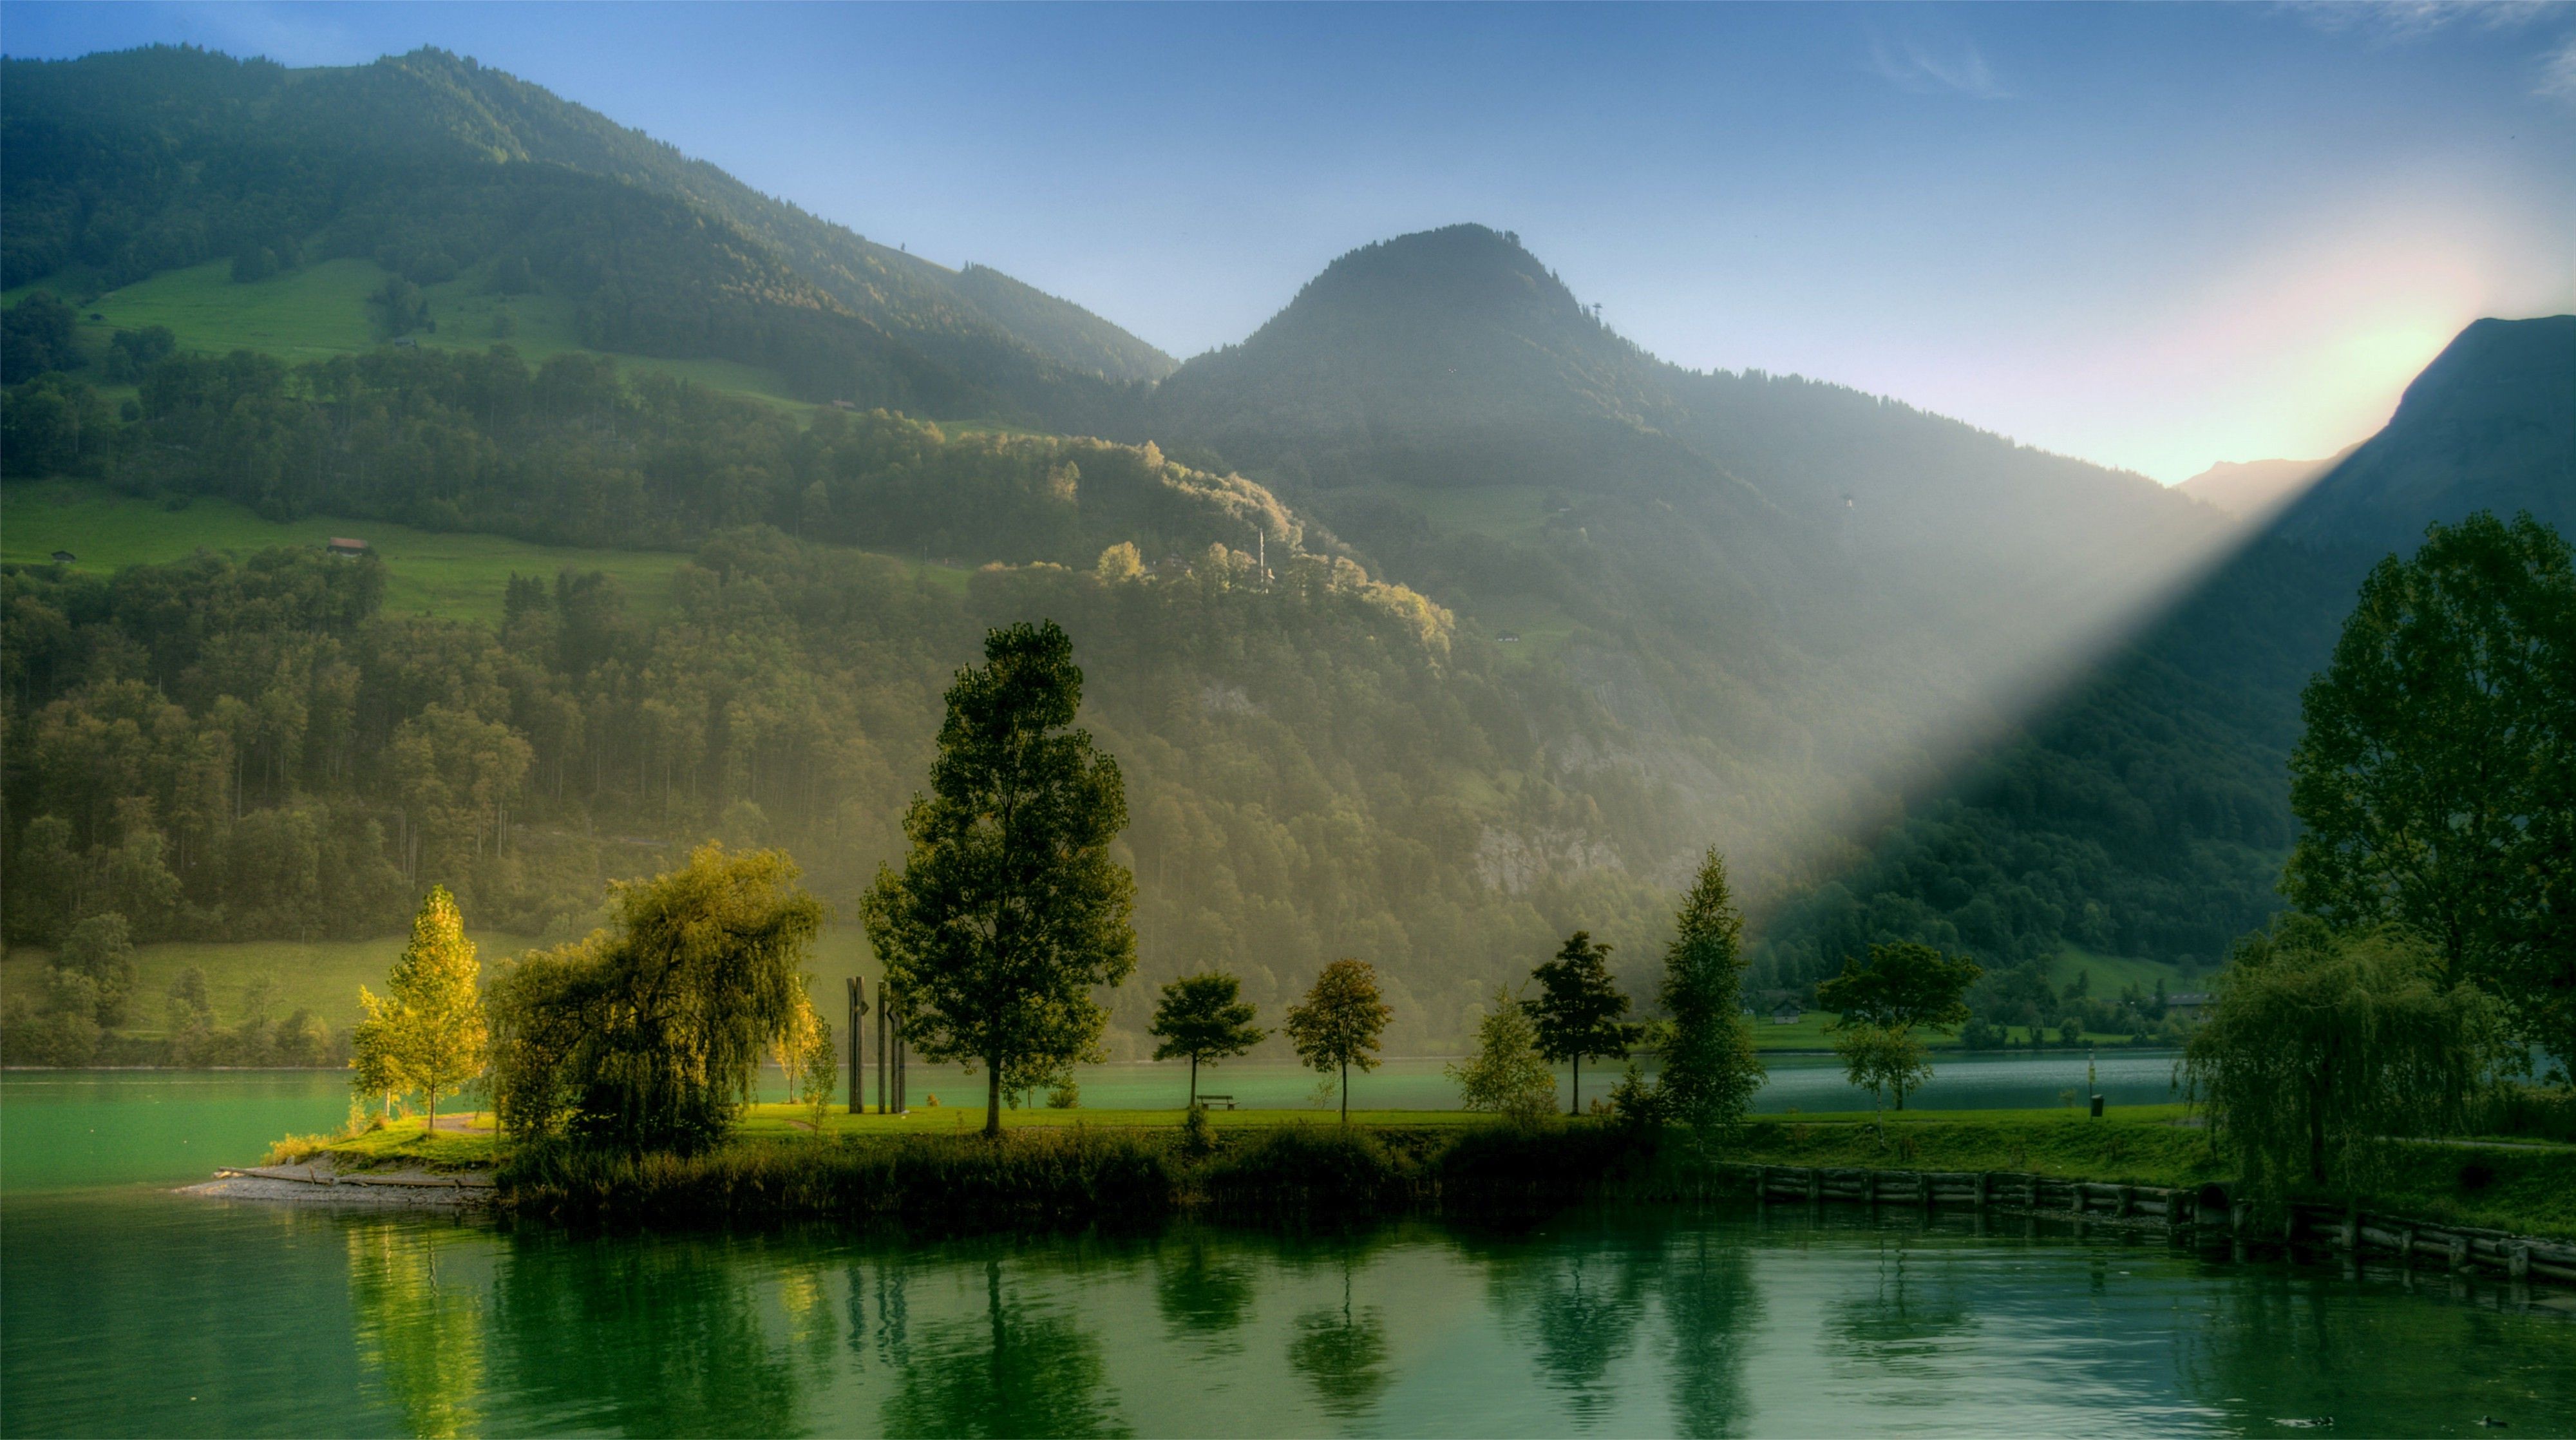 عکس آرام بخش دریاچه ی زیبا در طبیعت سوئیس